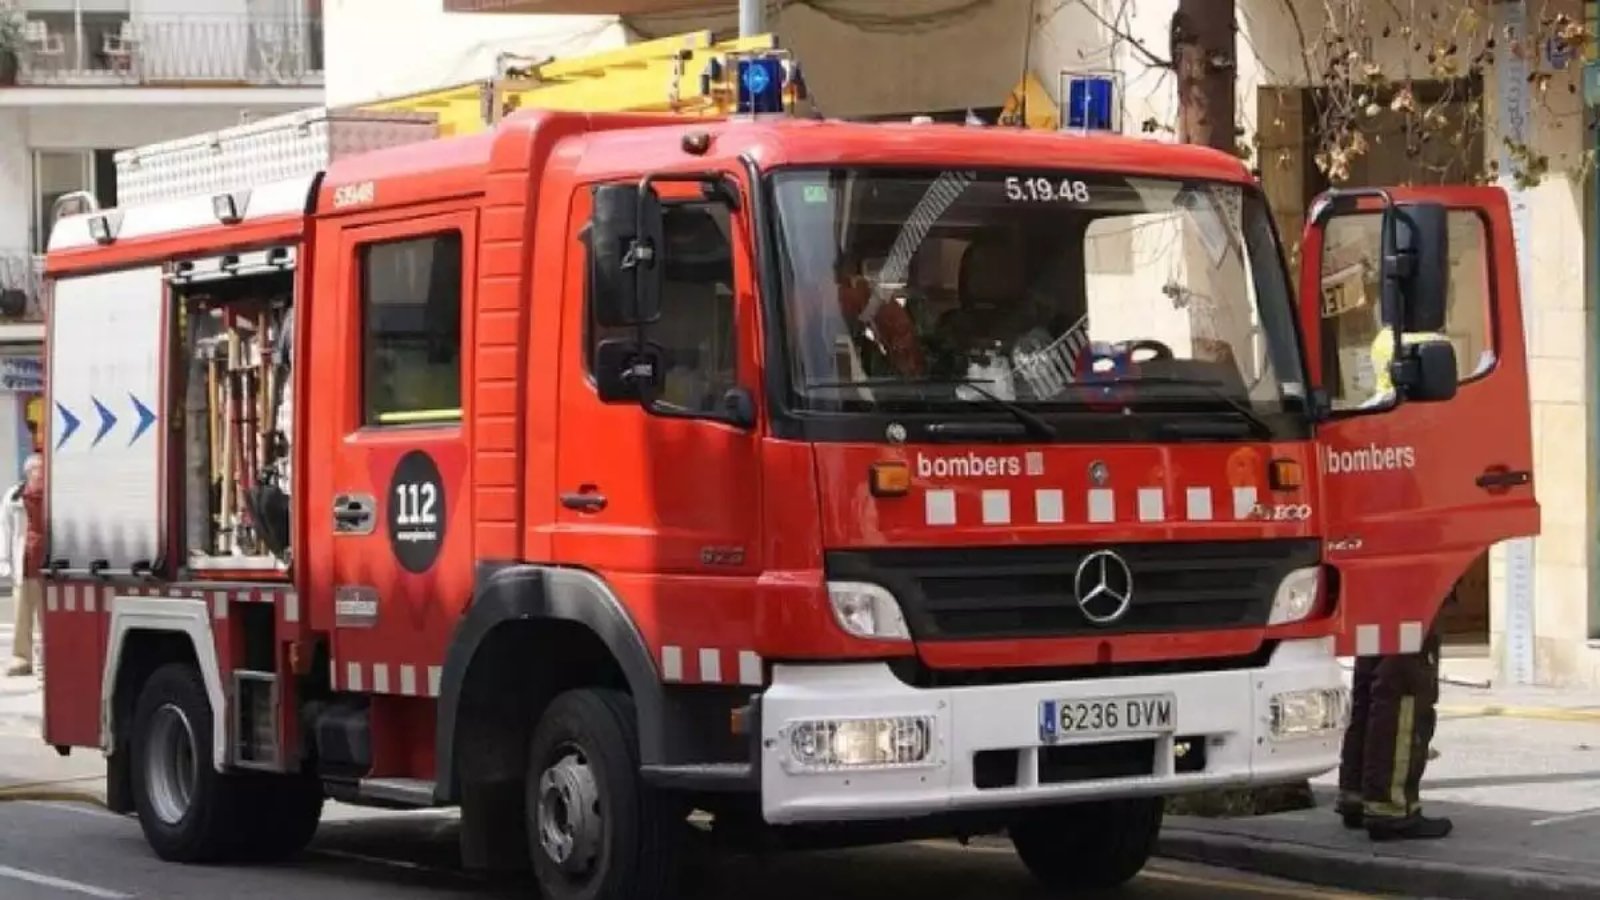 Cuatro heridos al explotar un hornillo para asar en un restaurante de Viladecans